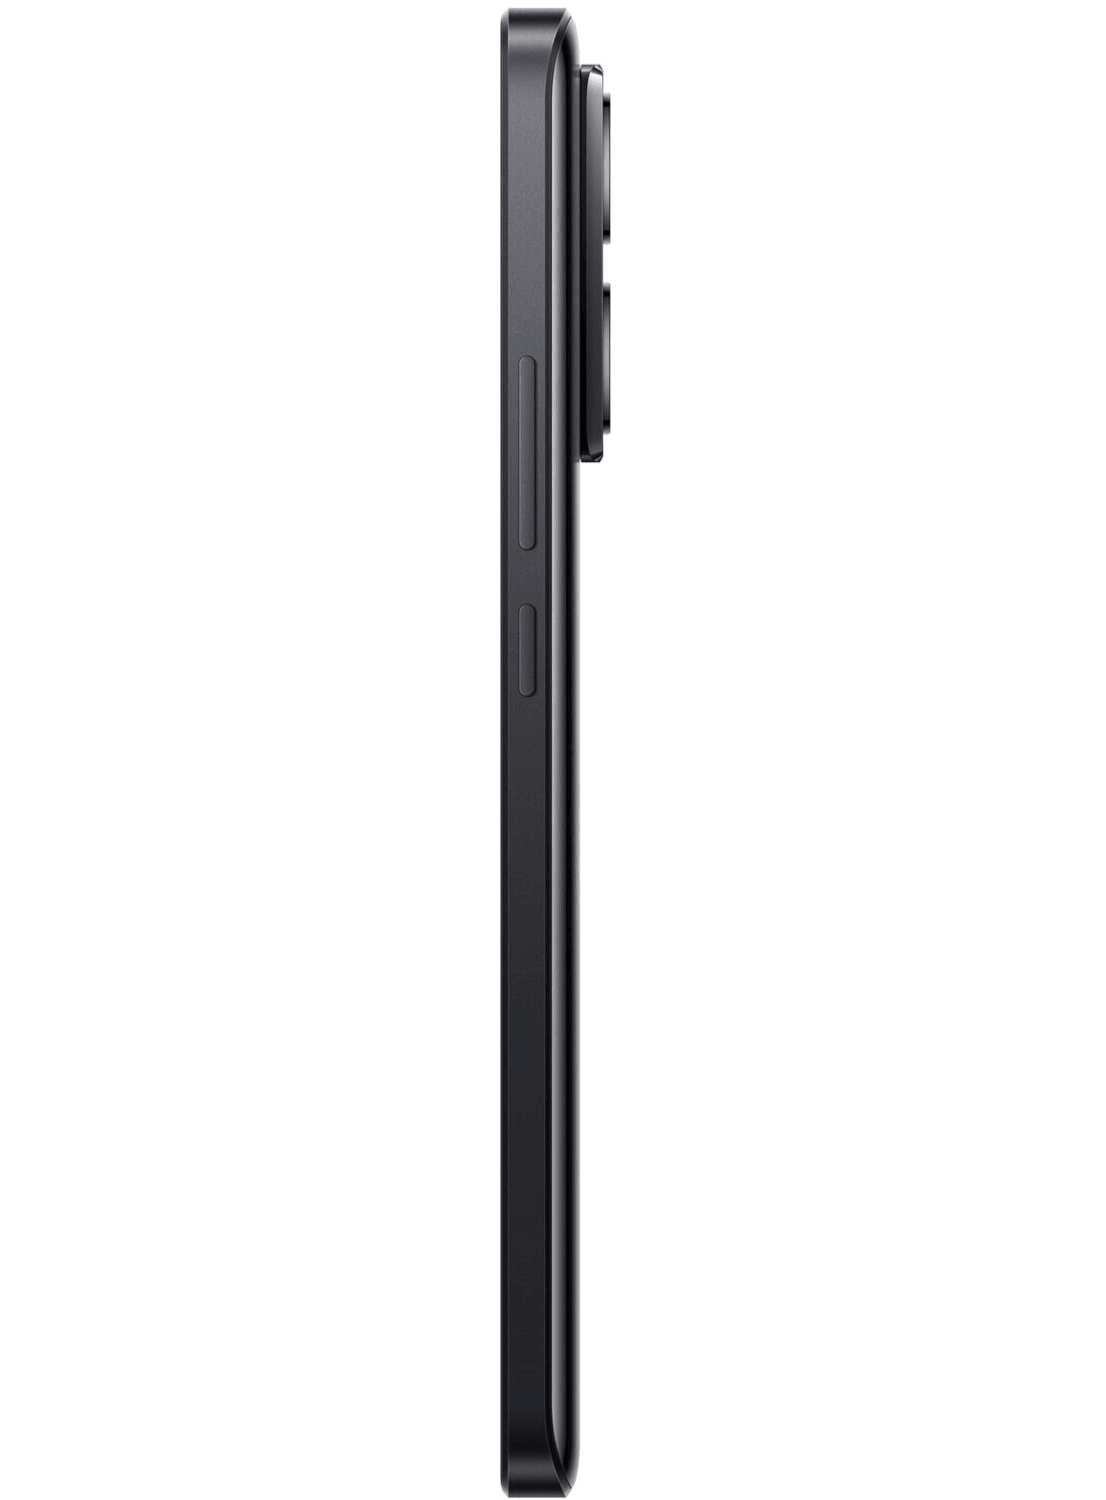 Xiaomi 13T Dual Sim - CarbonPhone